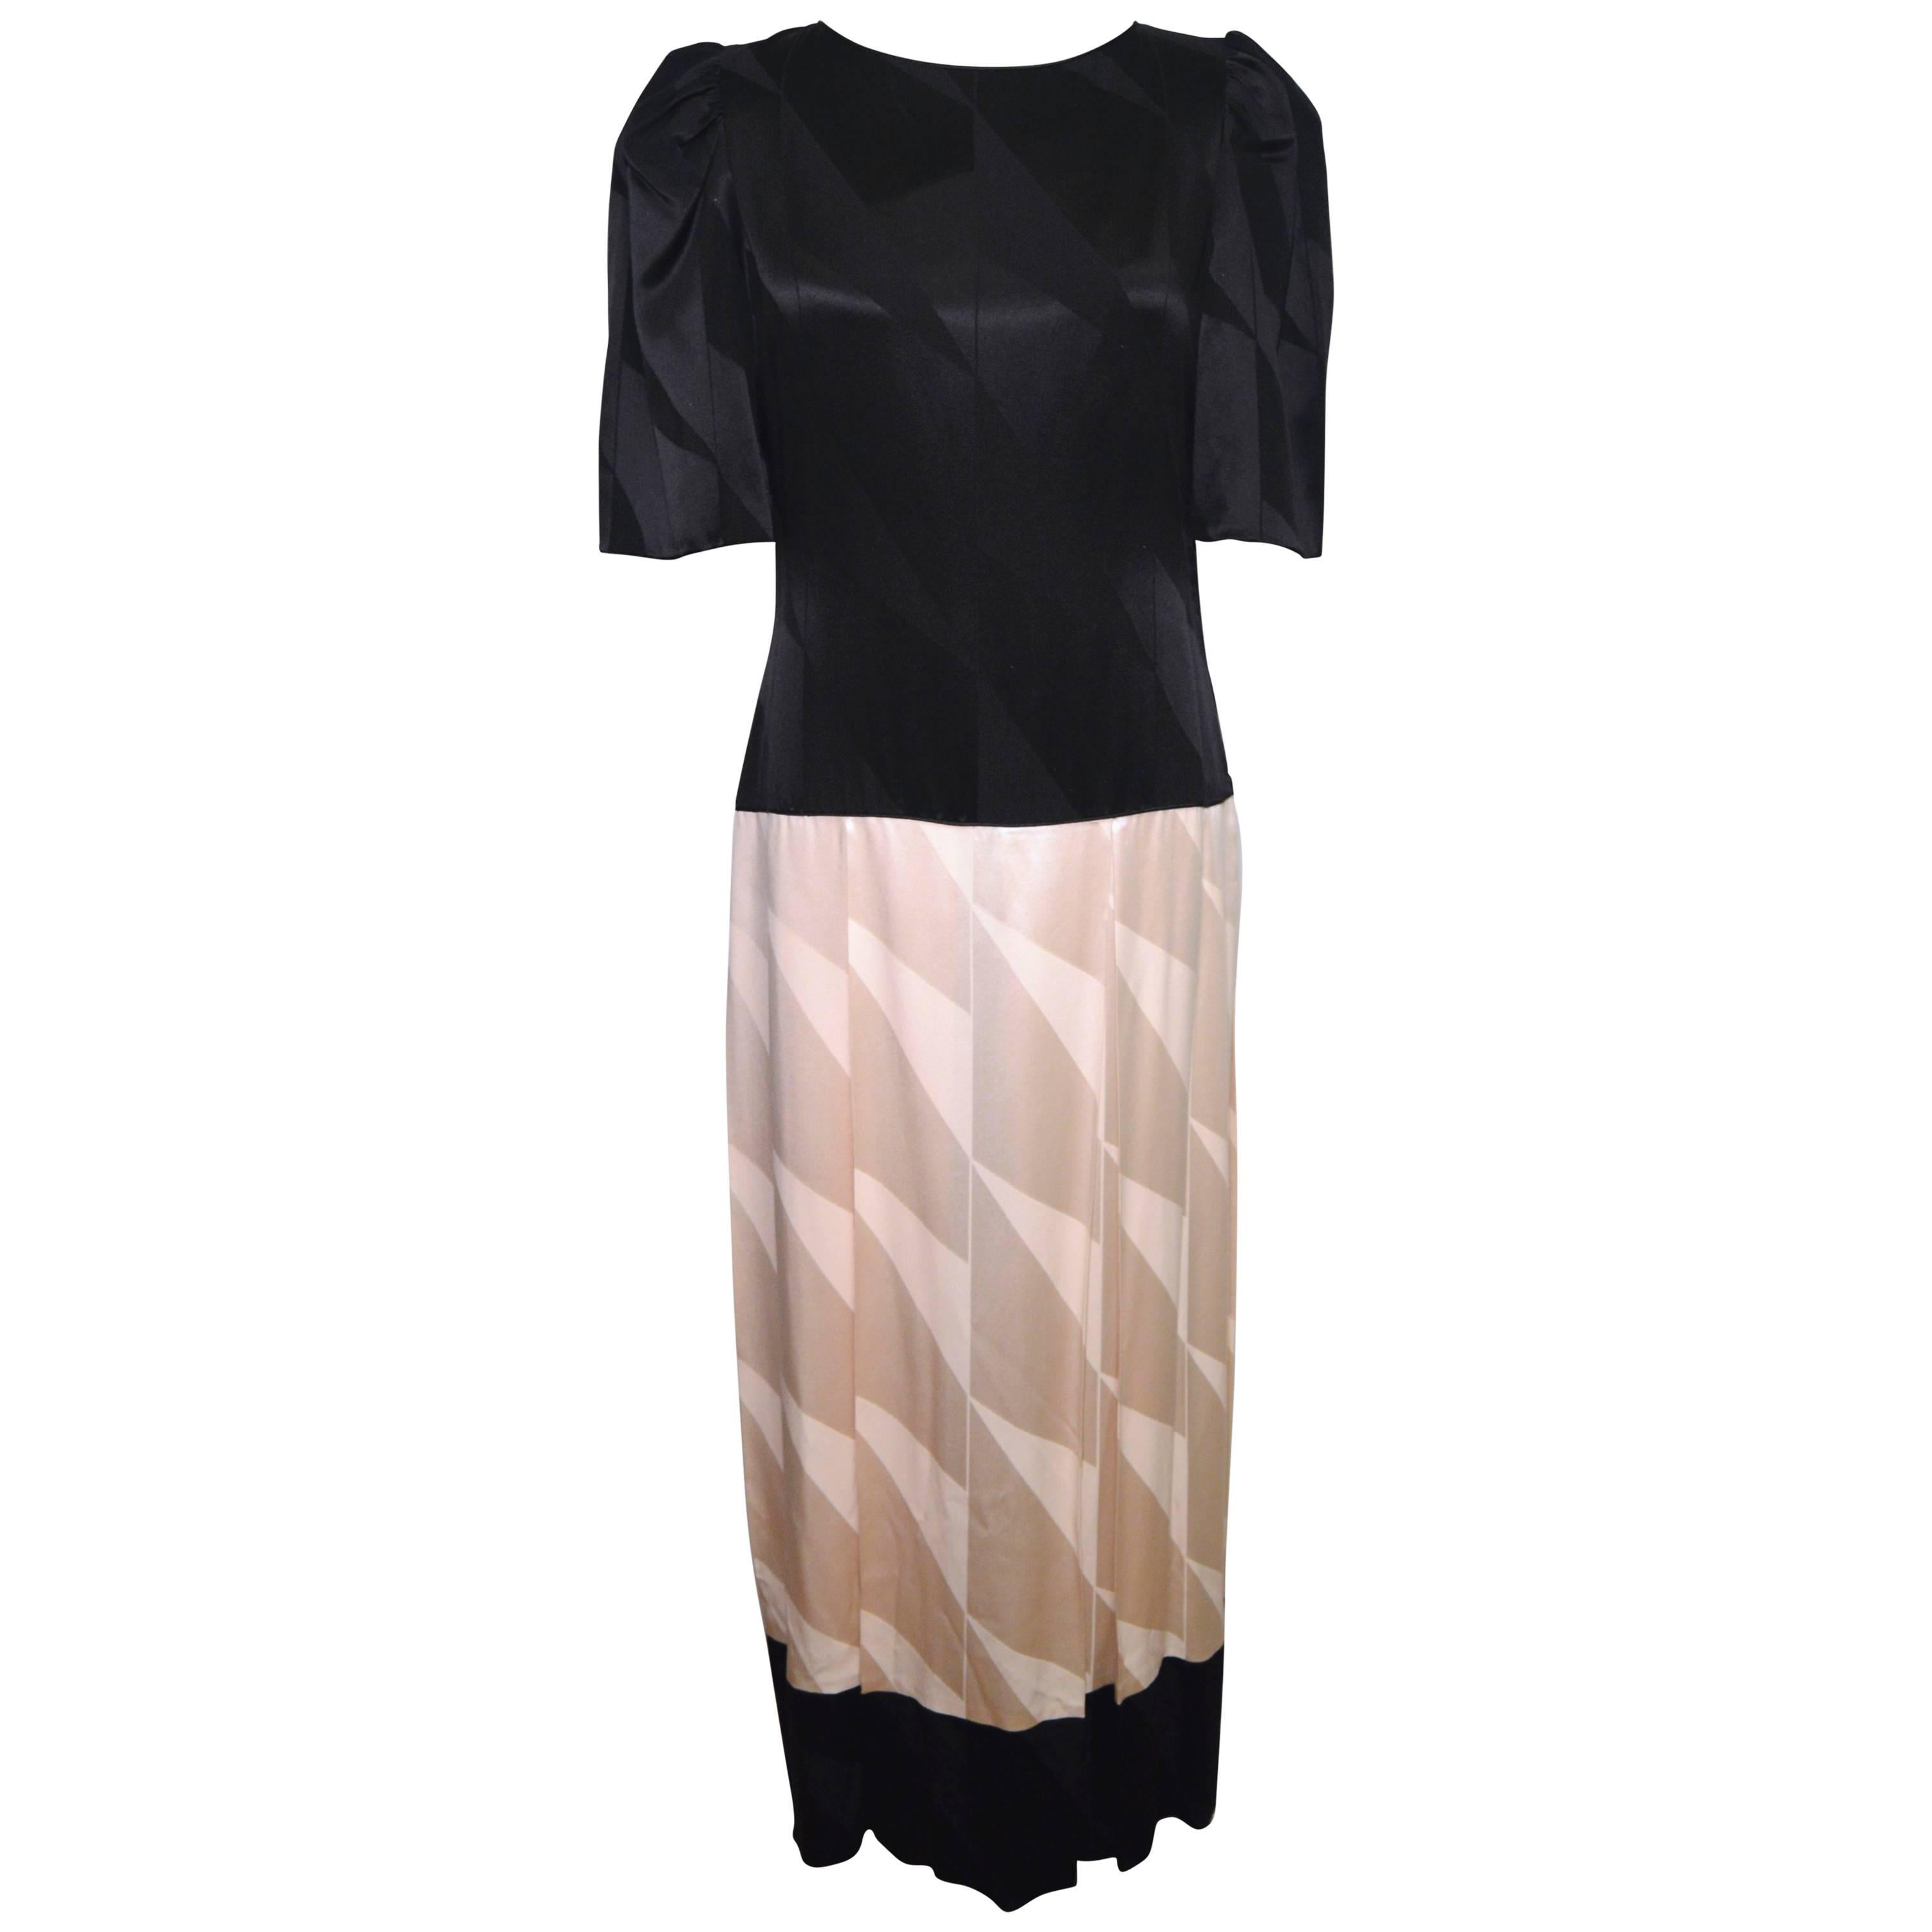 Mary McFadden Vintage 1980s Black and White Silk Drop Waist Dress Size 8